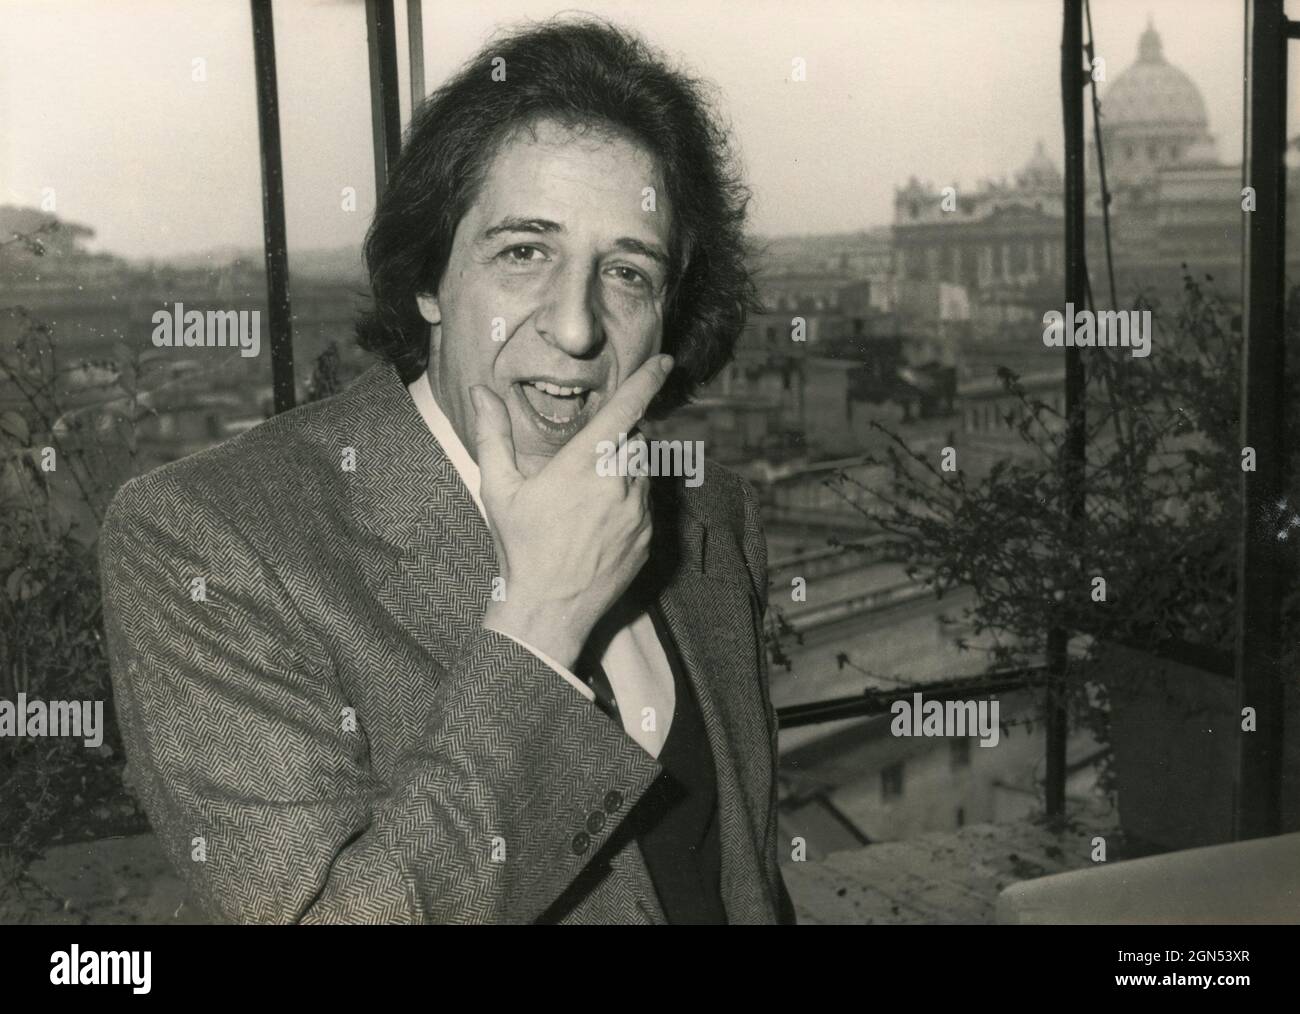 Italian singer and song writer Giorgio Gaber, 1970s Stock Photo